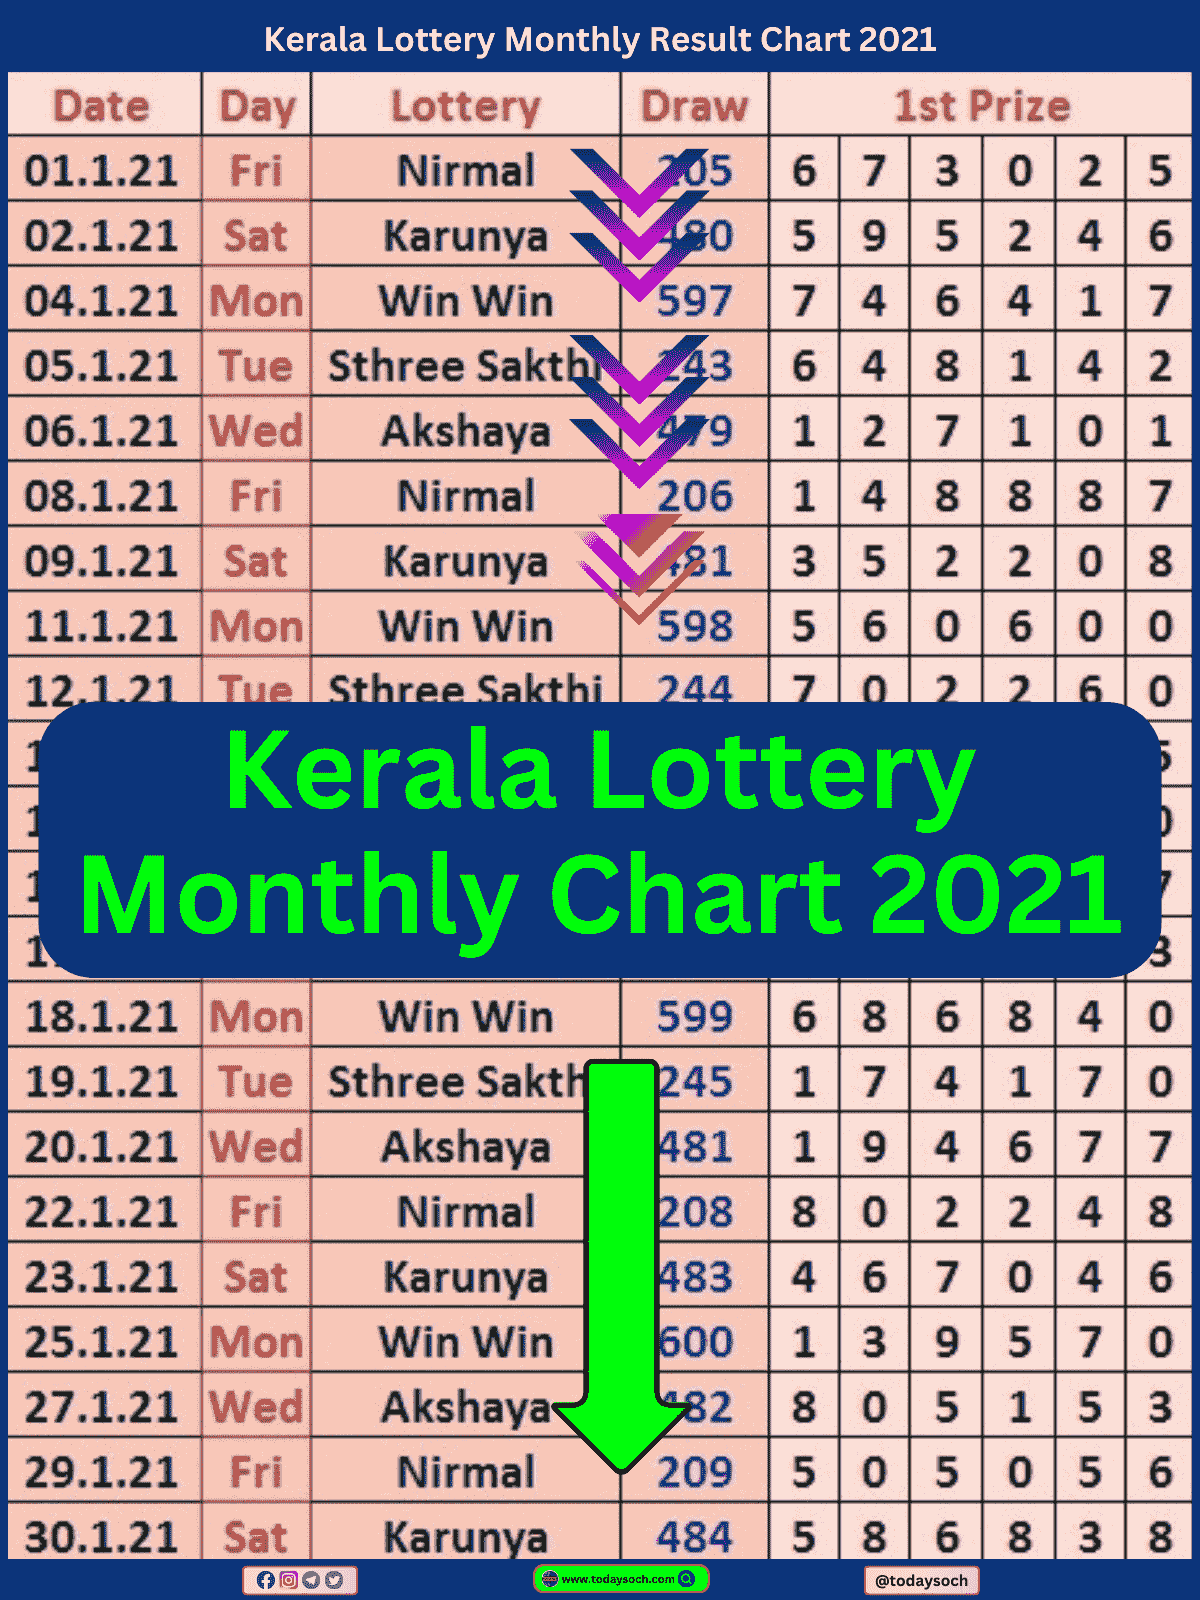 Kerala Lottery Monthly Chart 2021